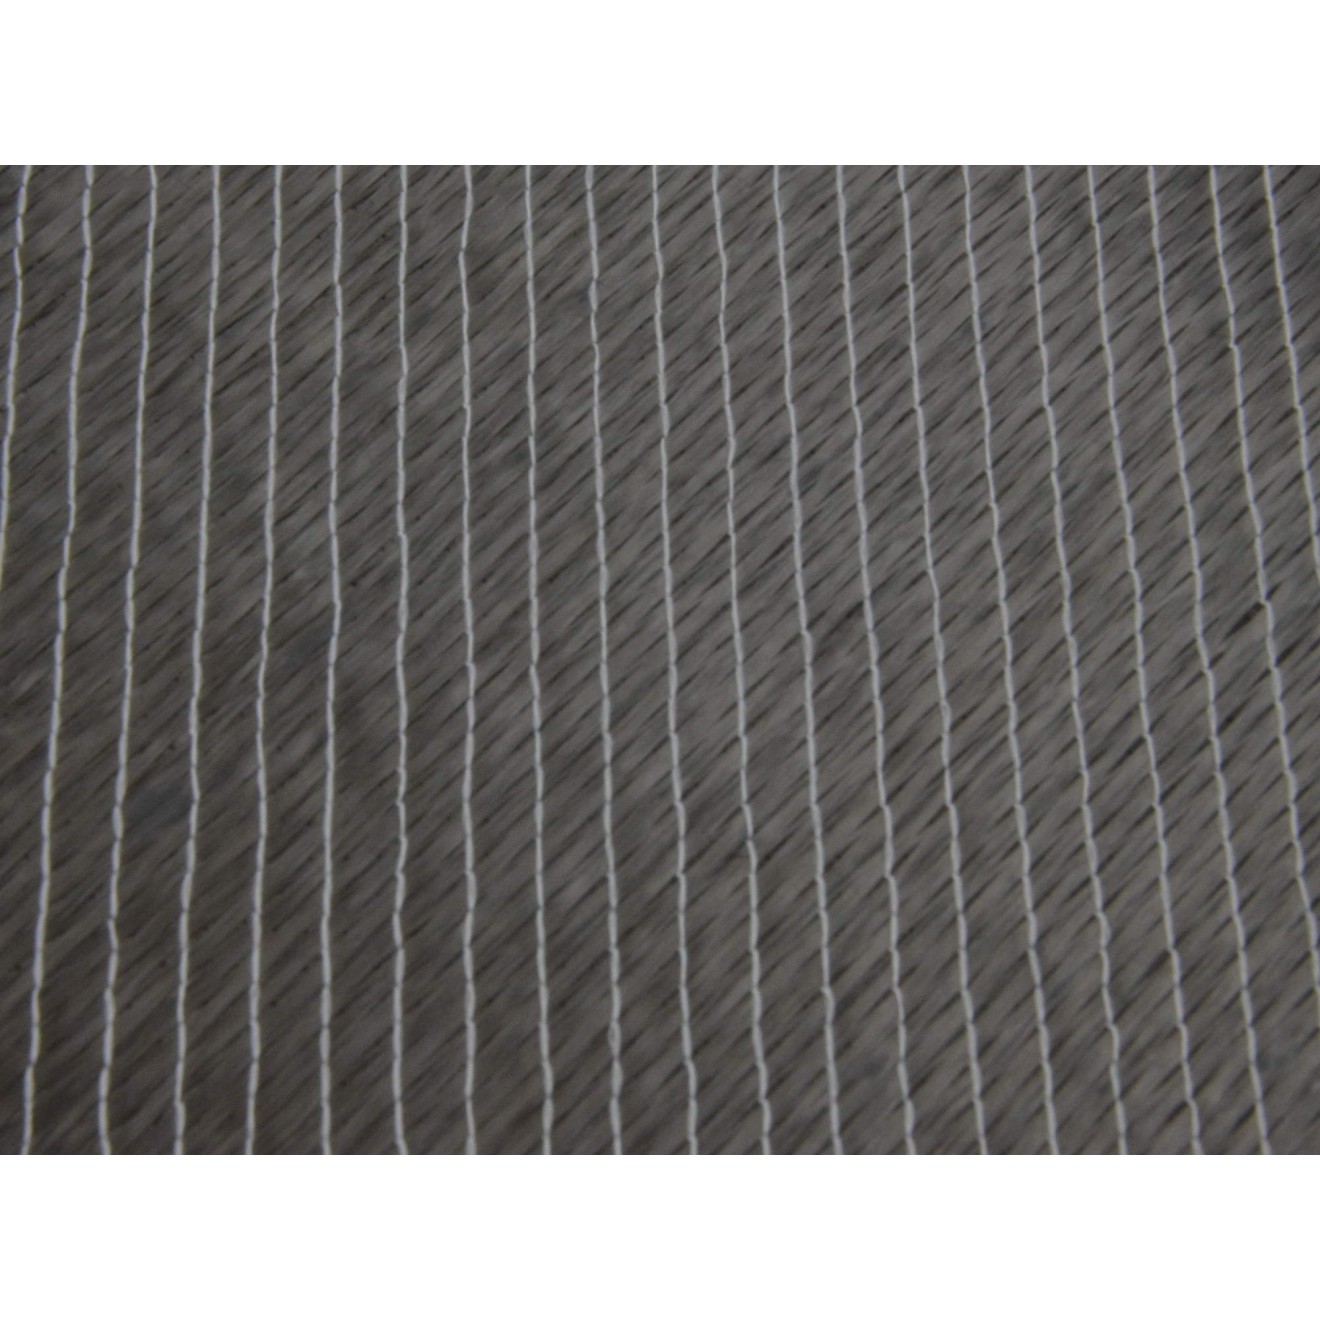 Carbon non-crimp fabric biaxial 80g/m2 width 127cm